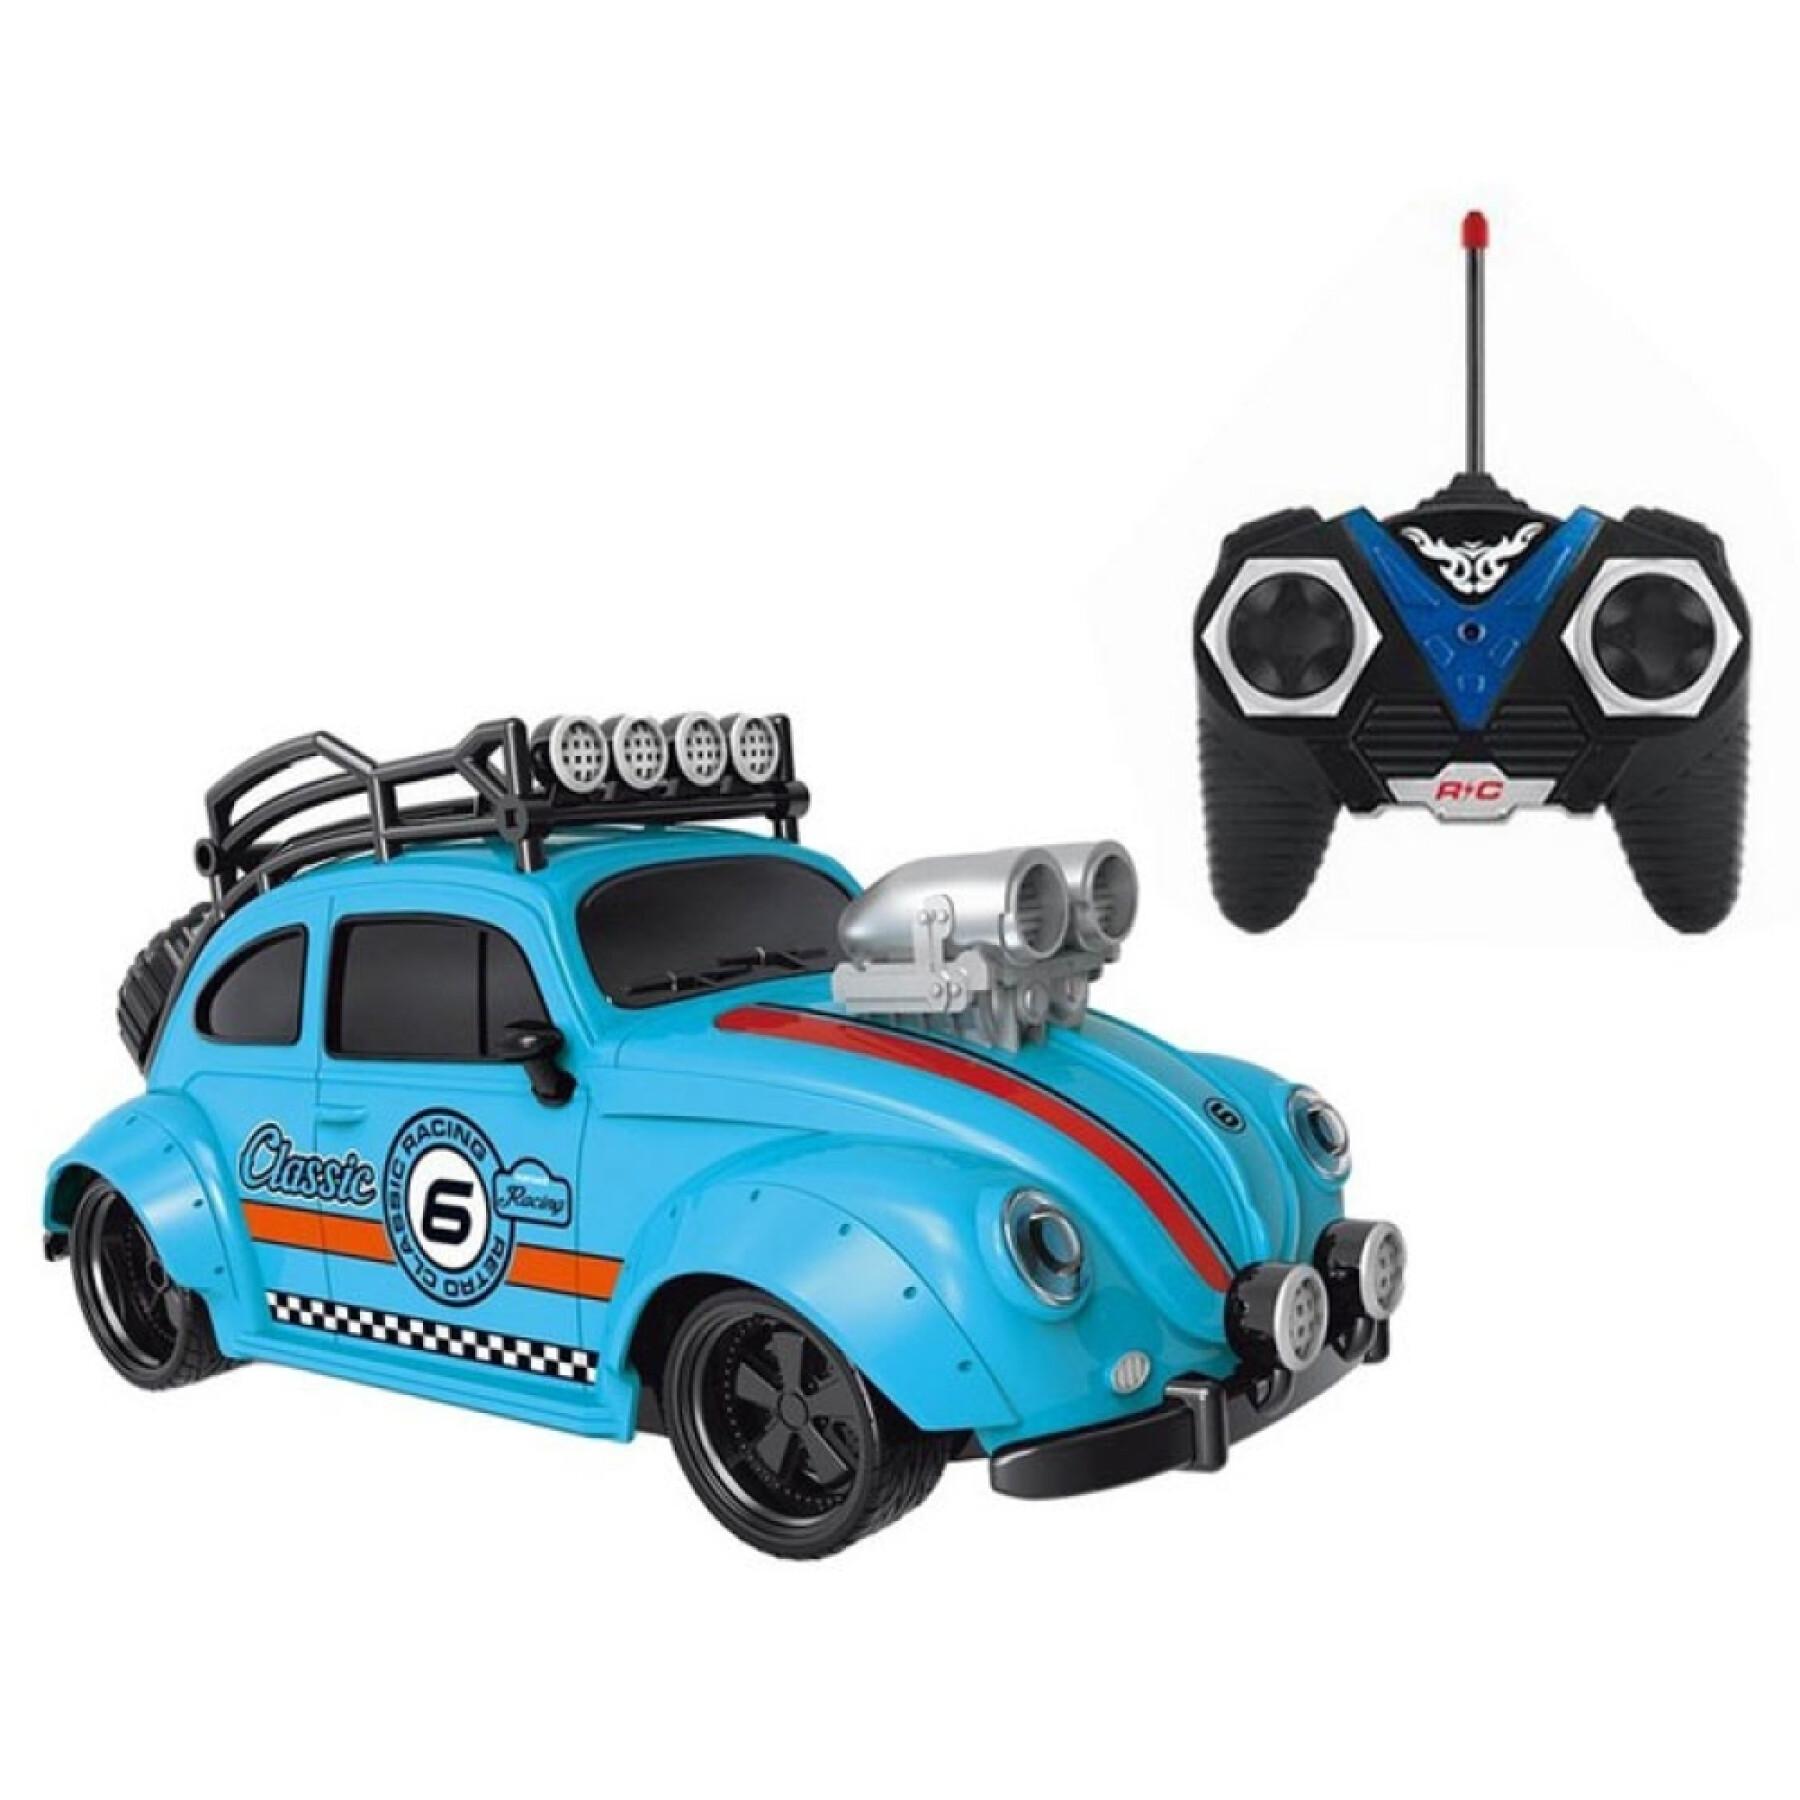 Remote control car 7 functions 2 assorted colors Fantastiko Beetle 24 cm